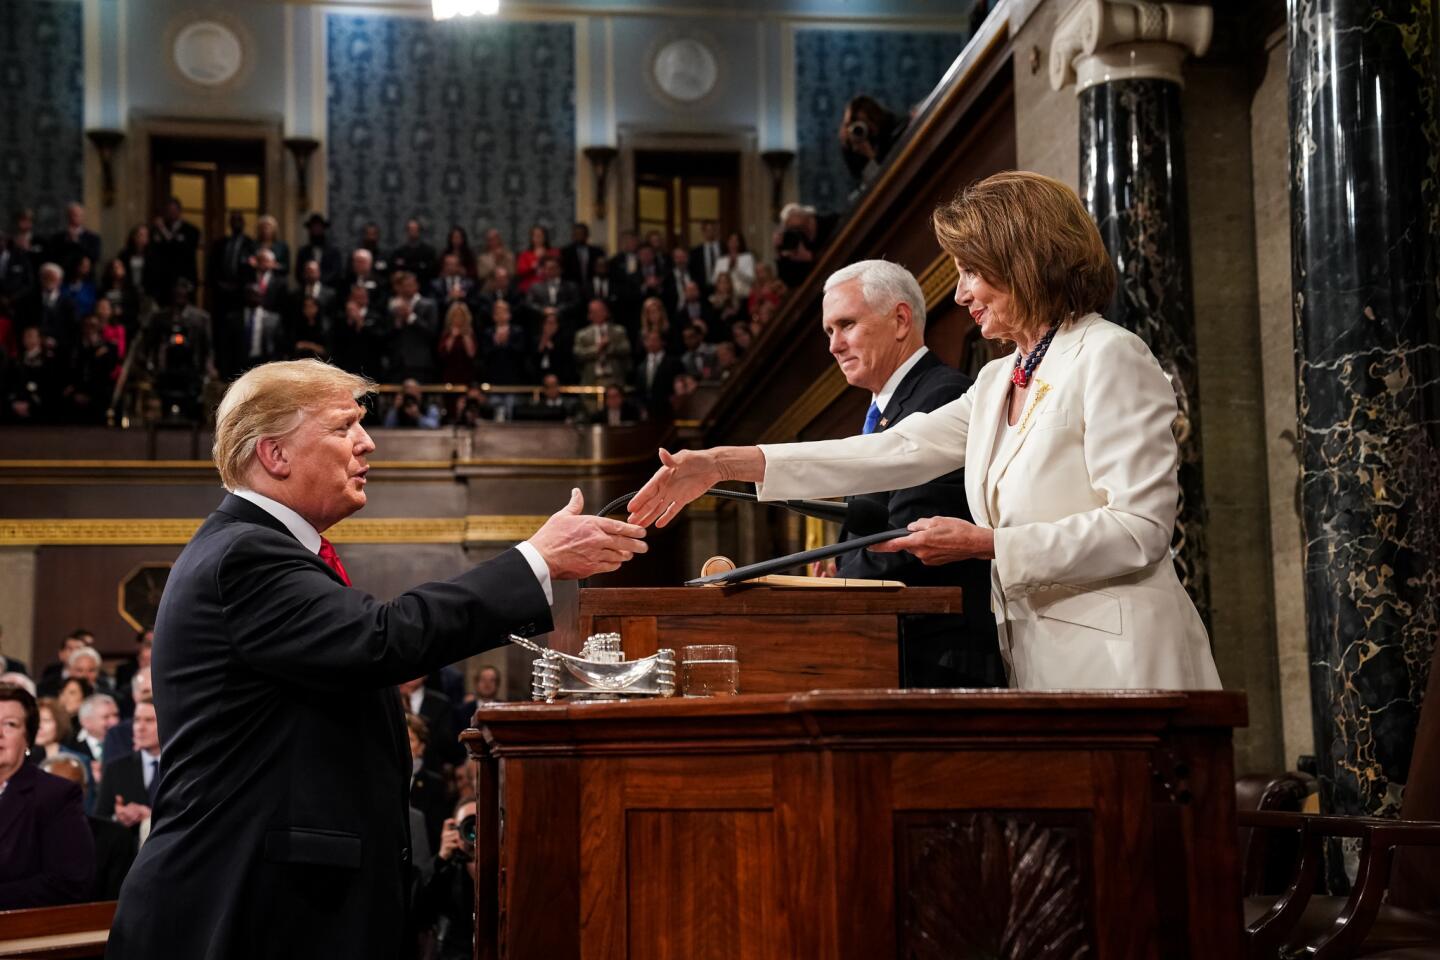 House Speaker Nancy Pelosi welcomes President Trump before his address.